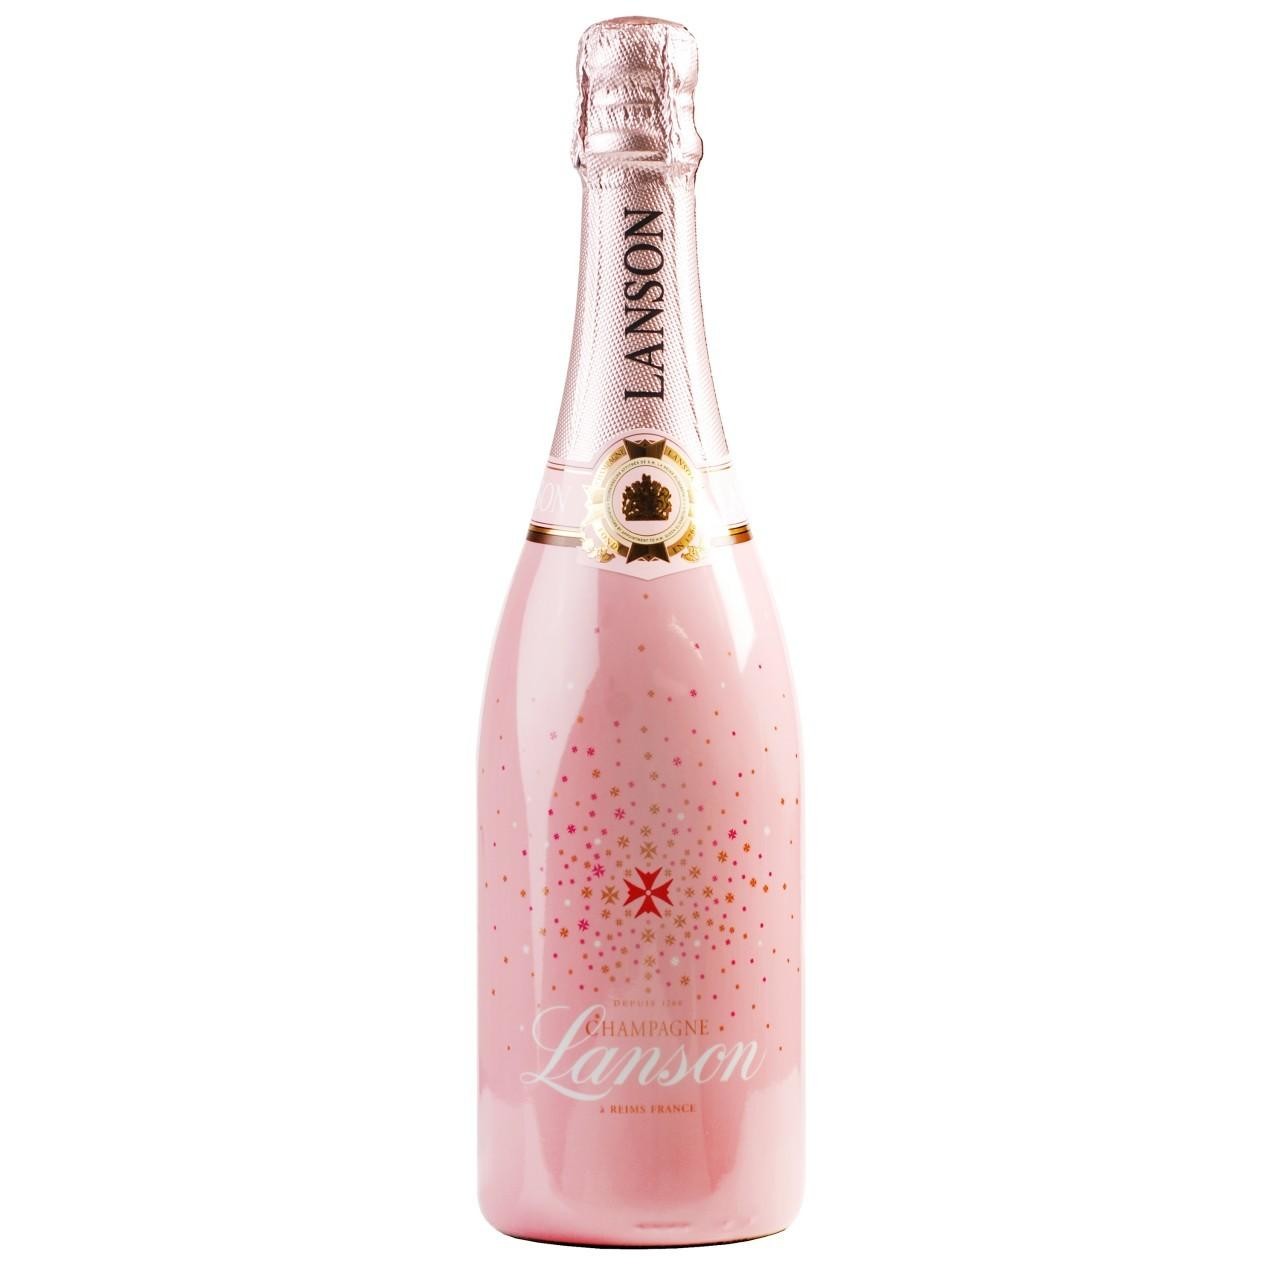 Champagne Lanson Rose Label 75cl Brut 